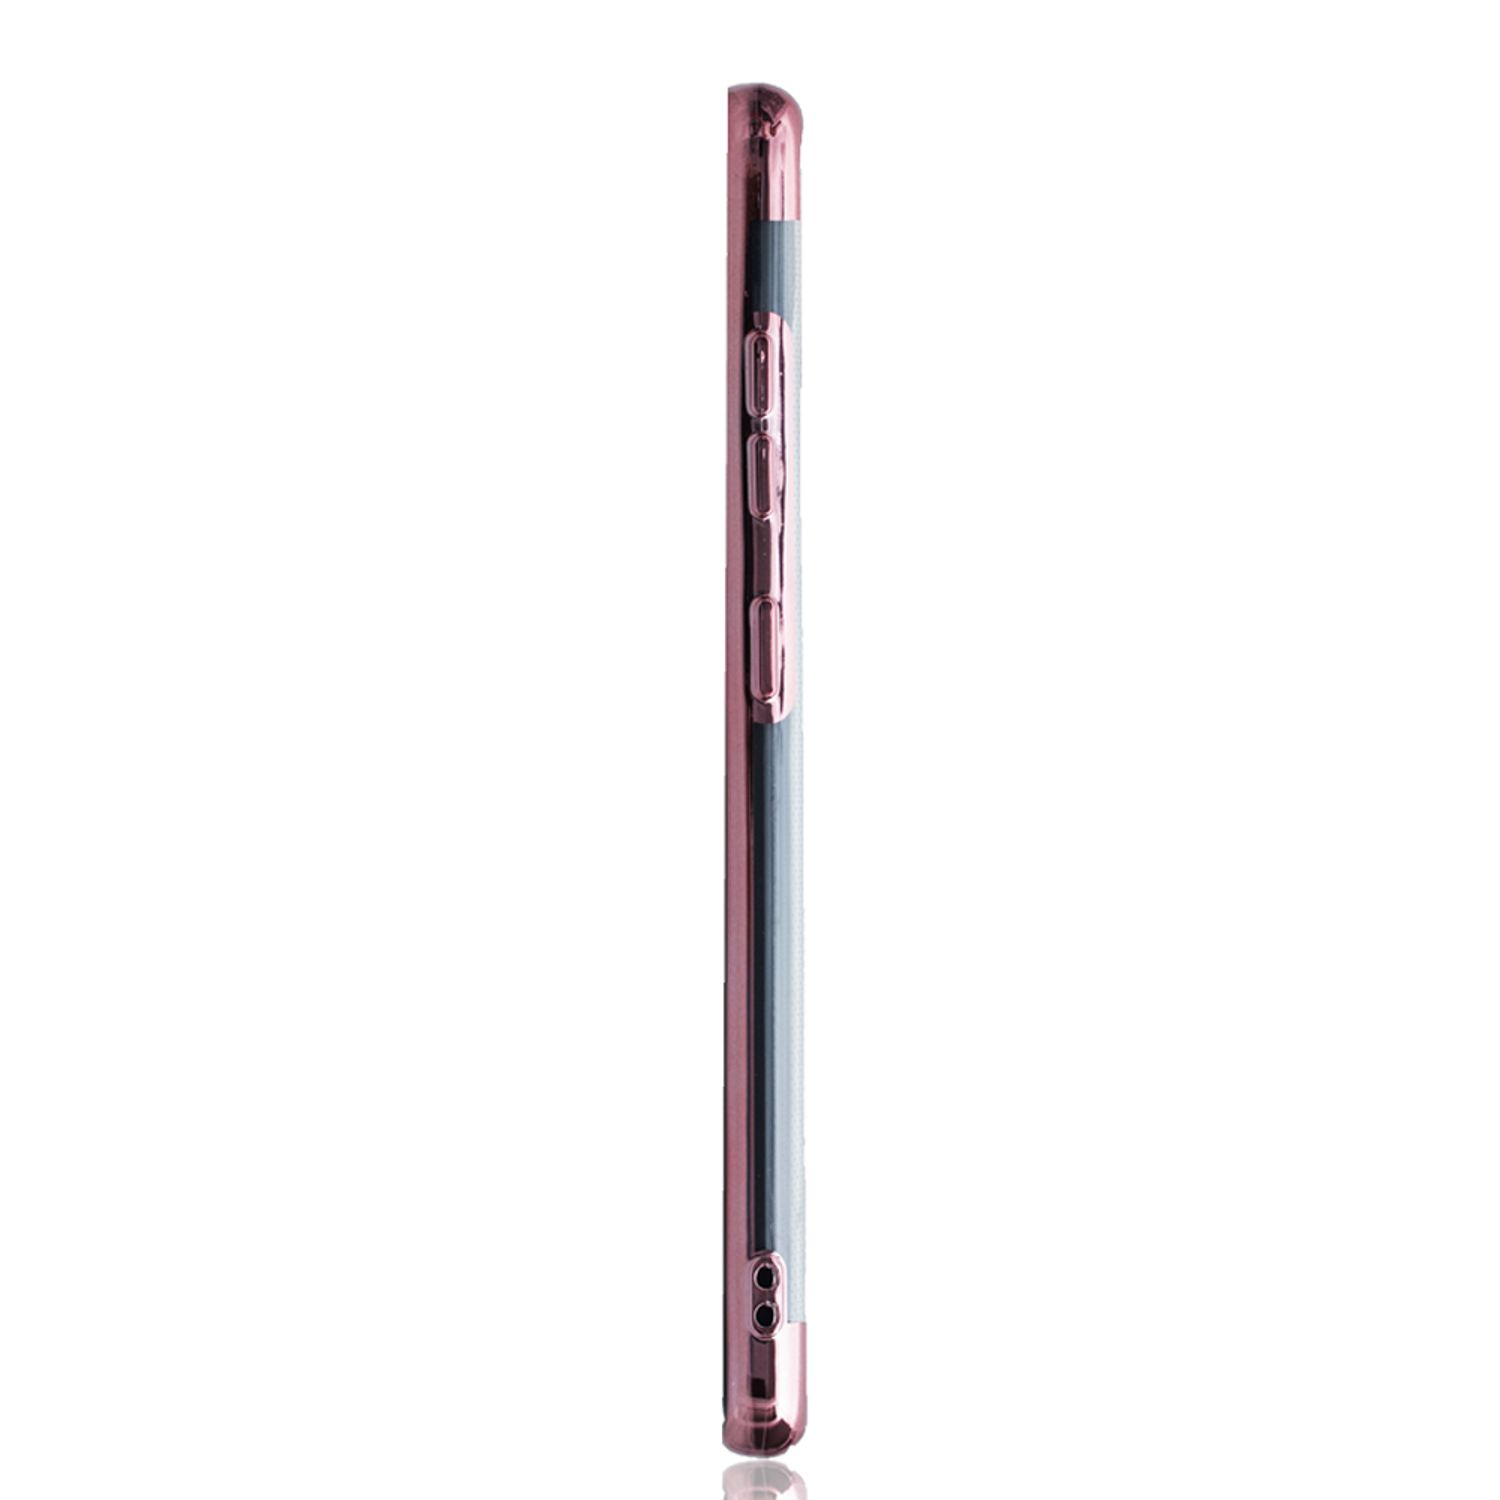 KÖNIG DESIGN A31, Samsung, Pink Backcover, Schutzhülle, Galaxy